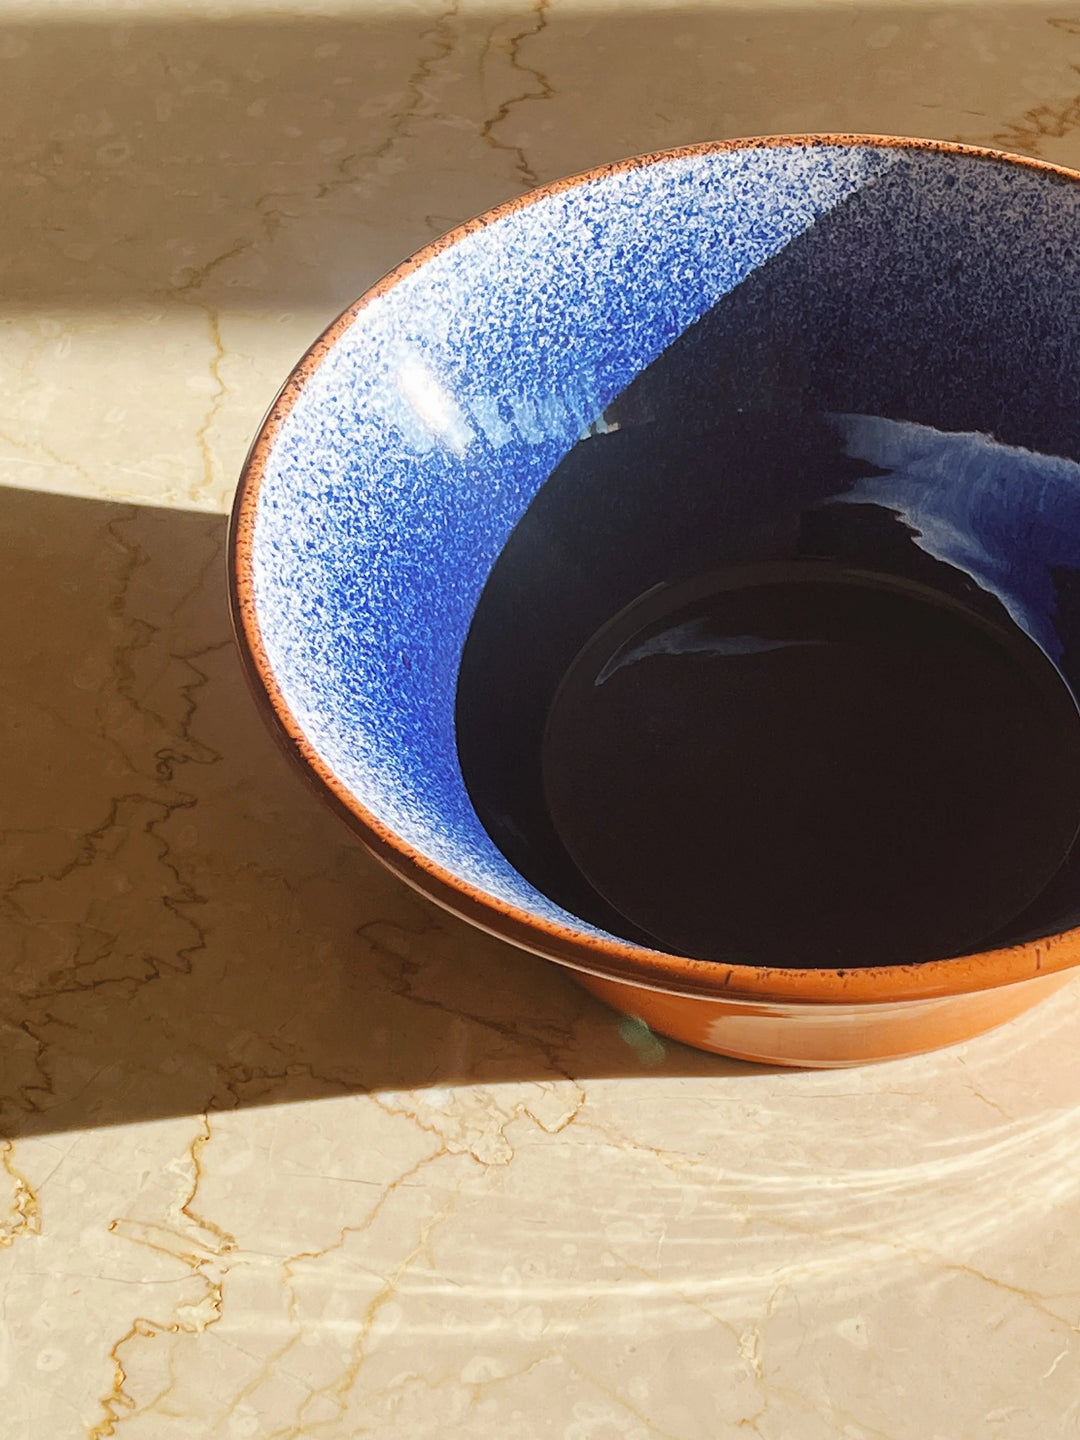 Håndlavet terracotta skål med blå og hvid splash/spray Casa Cubista